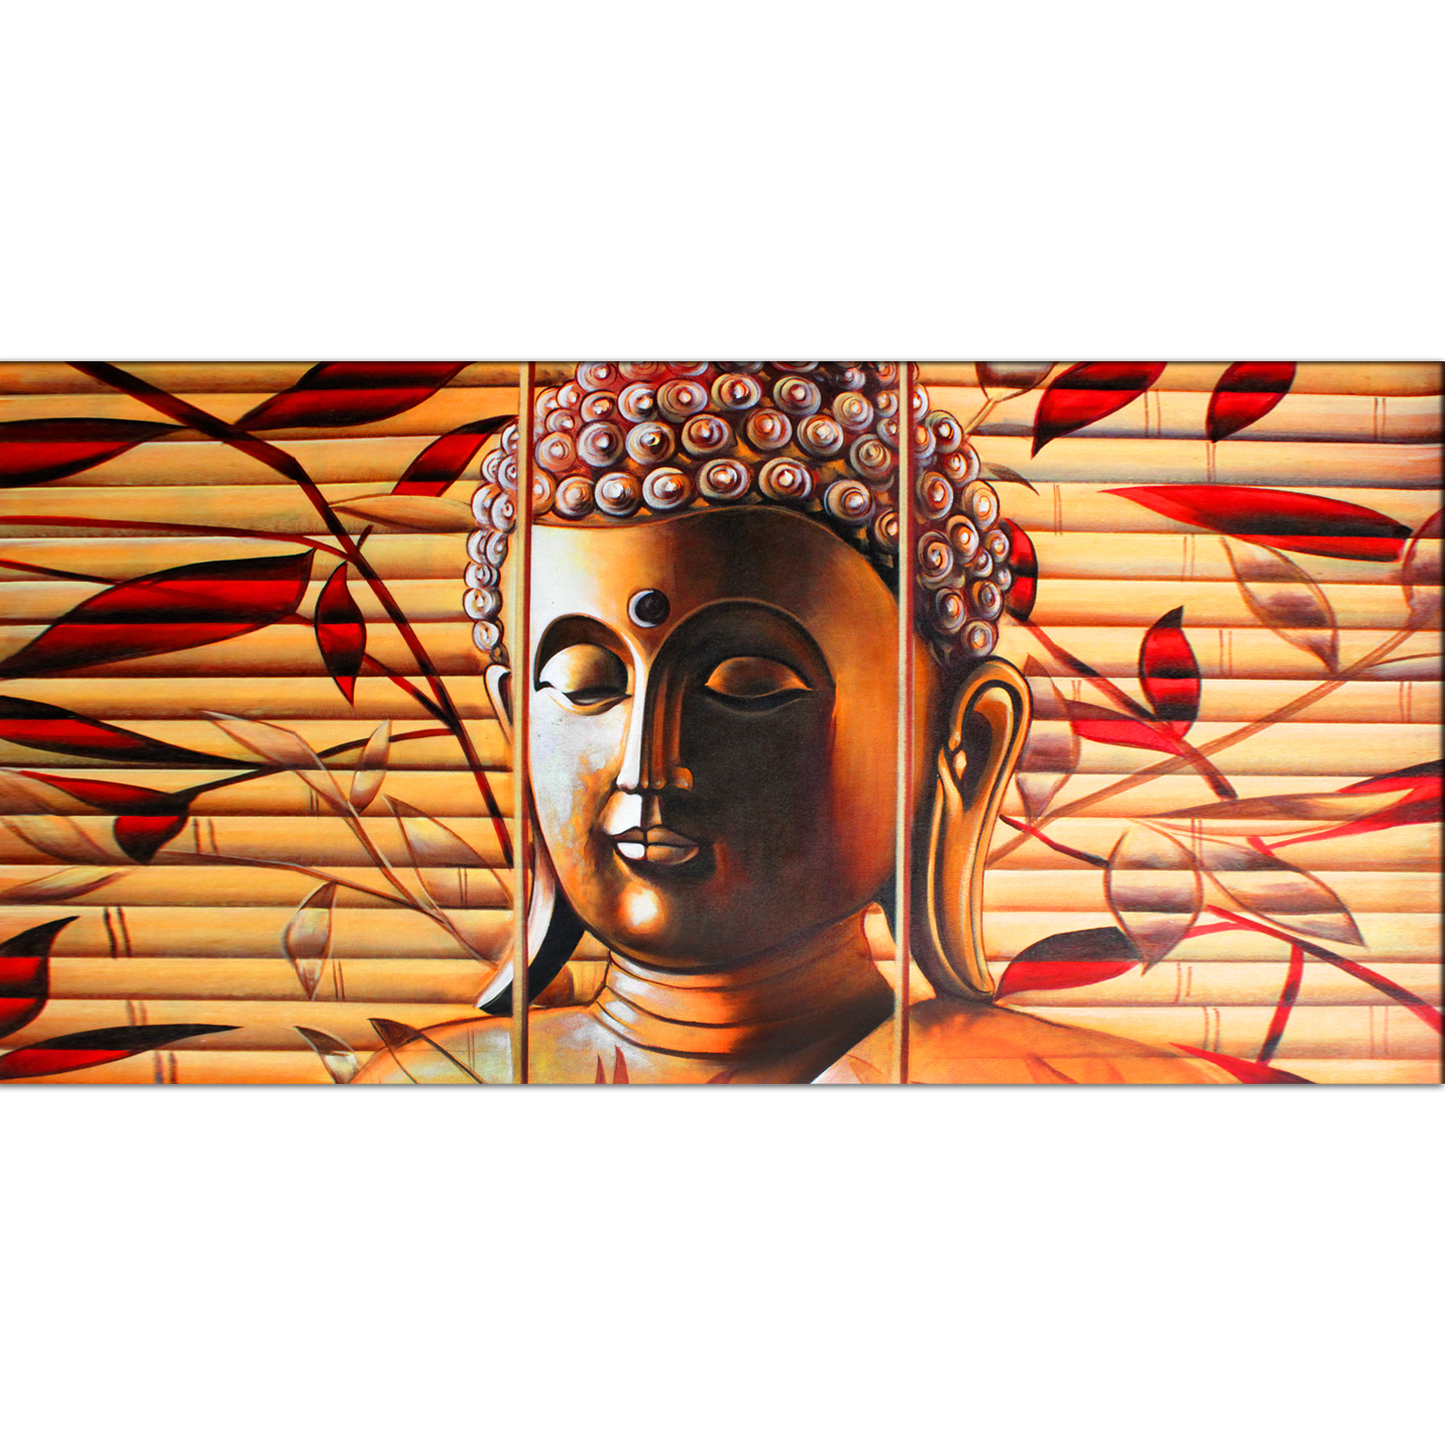 God Buddha Art Canvas Print Wall Painting